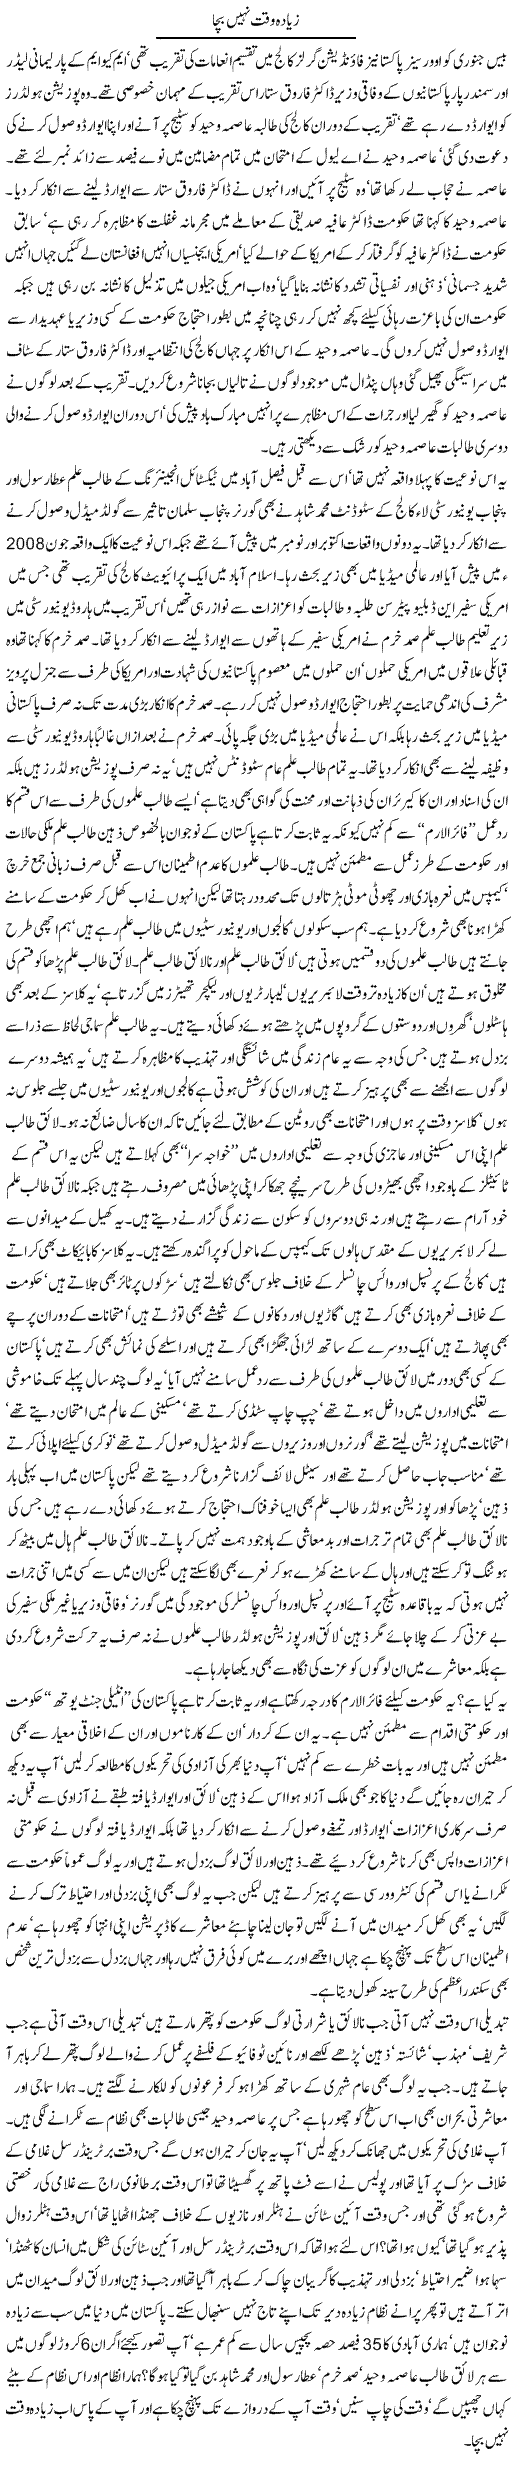 Zyada Waqt Nahi Express Column Javed Chaudhary 28 jan 2010